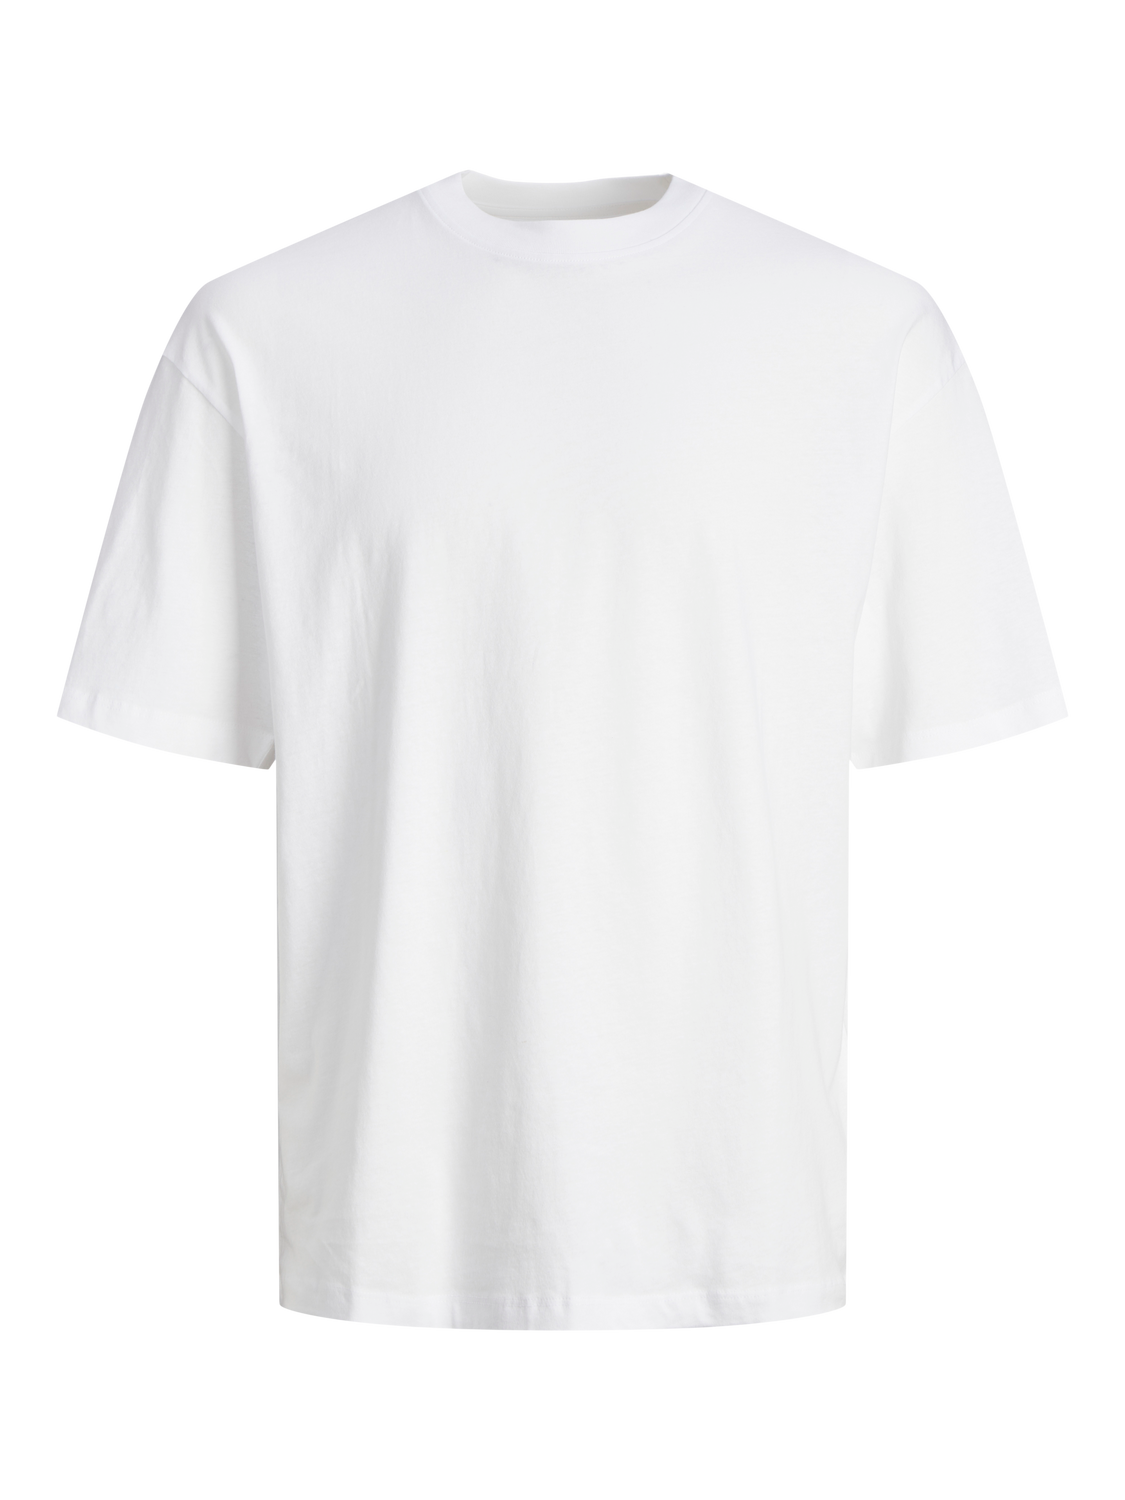 Camiseta básica blanca -JJEBRADLEY